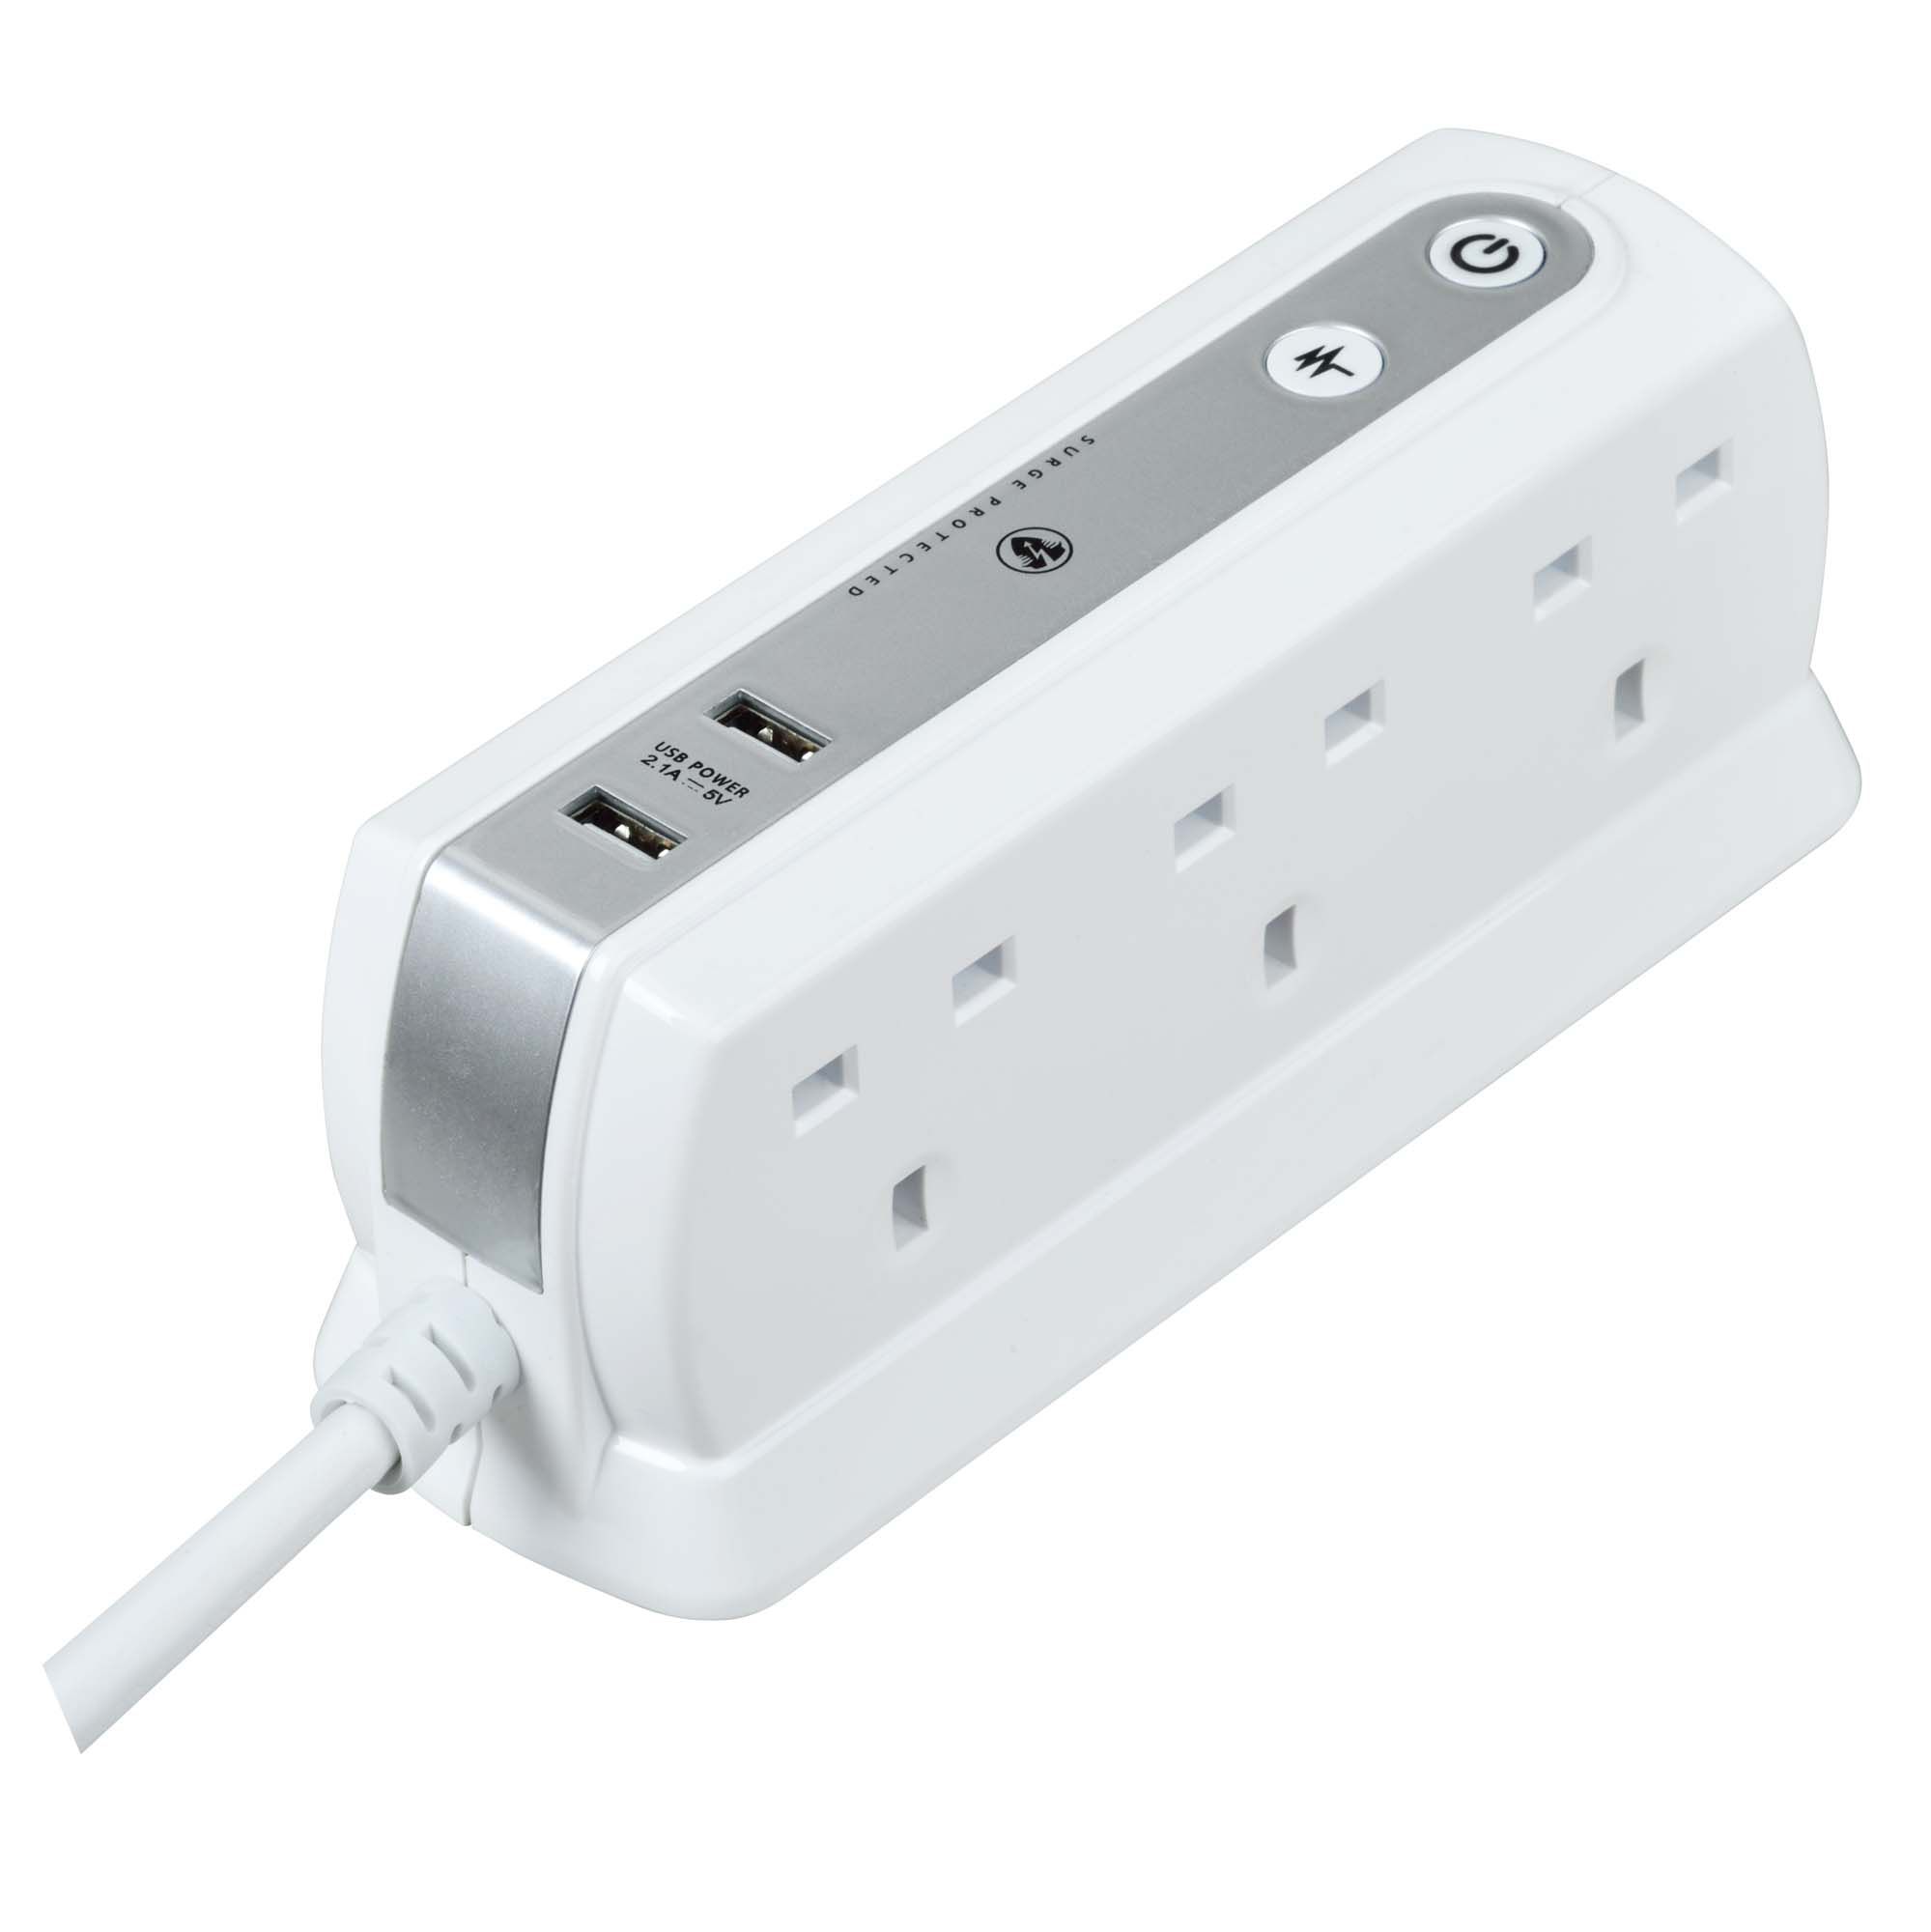 Masterplug Surge White 6 socket Extension lead with USB, 2m